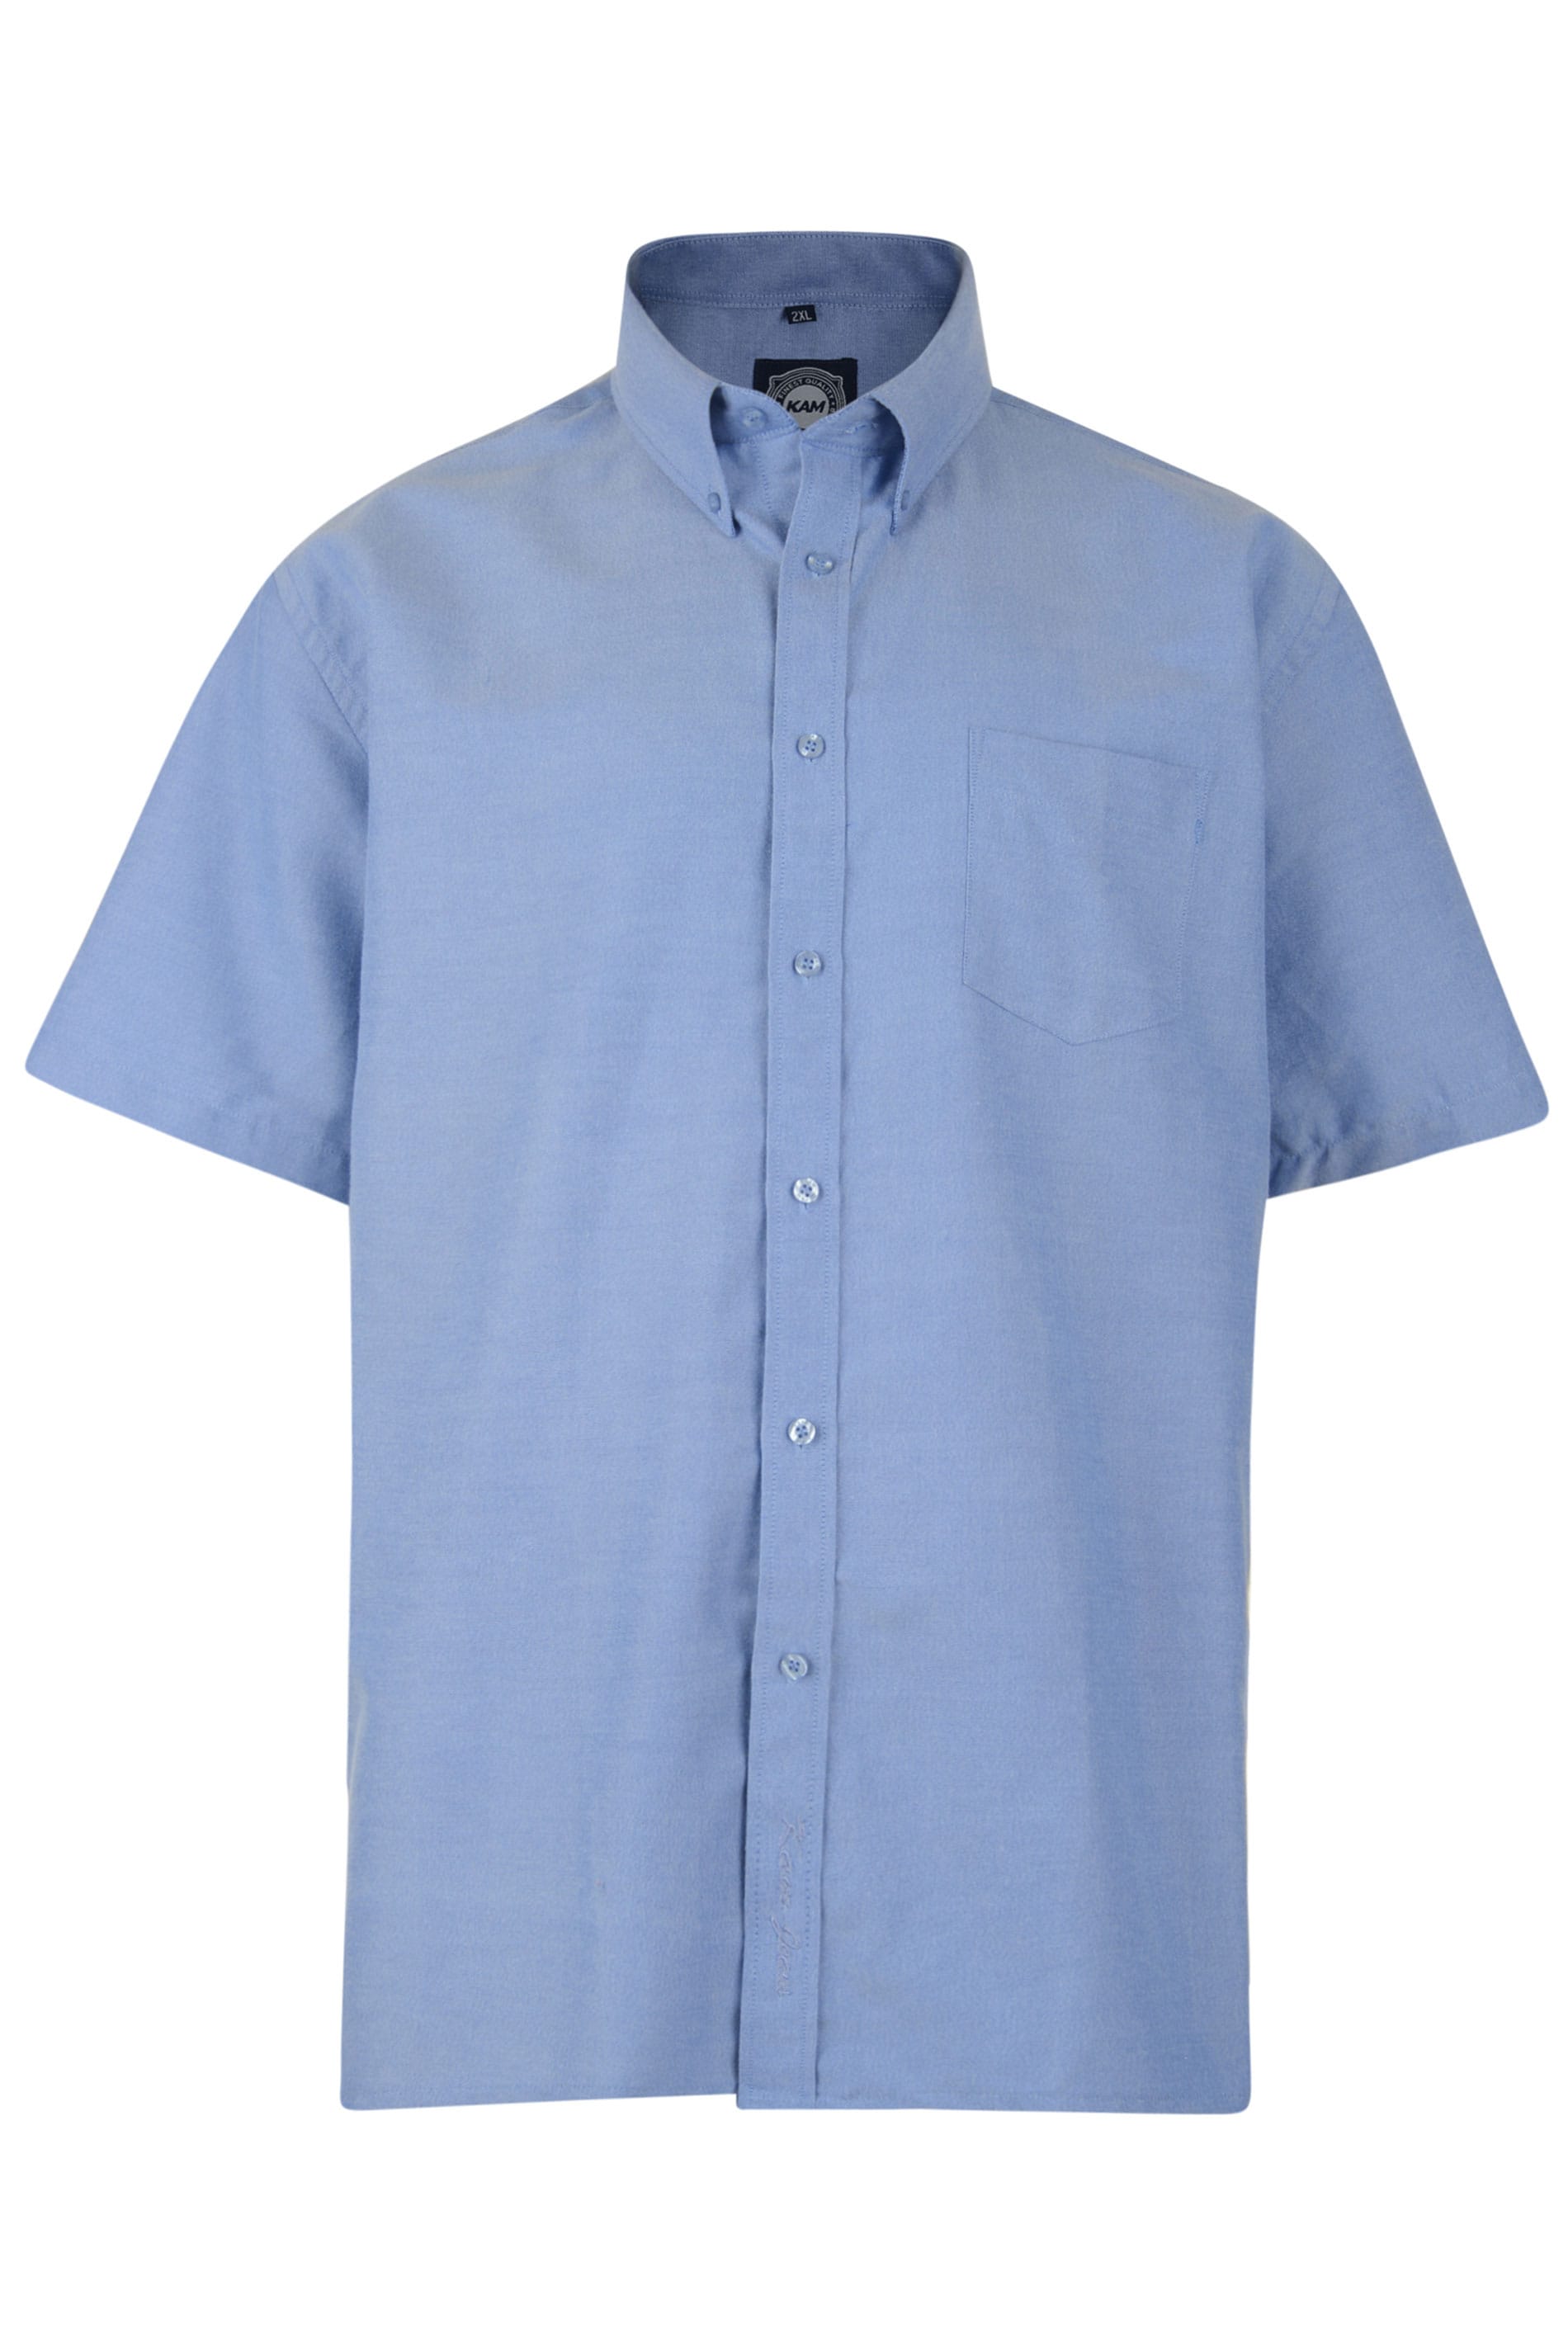 KAM Blue Oxford Short Sleeve Shirt | BadRhino 2